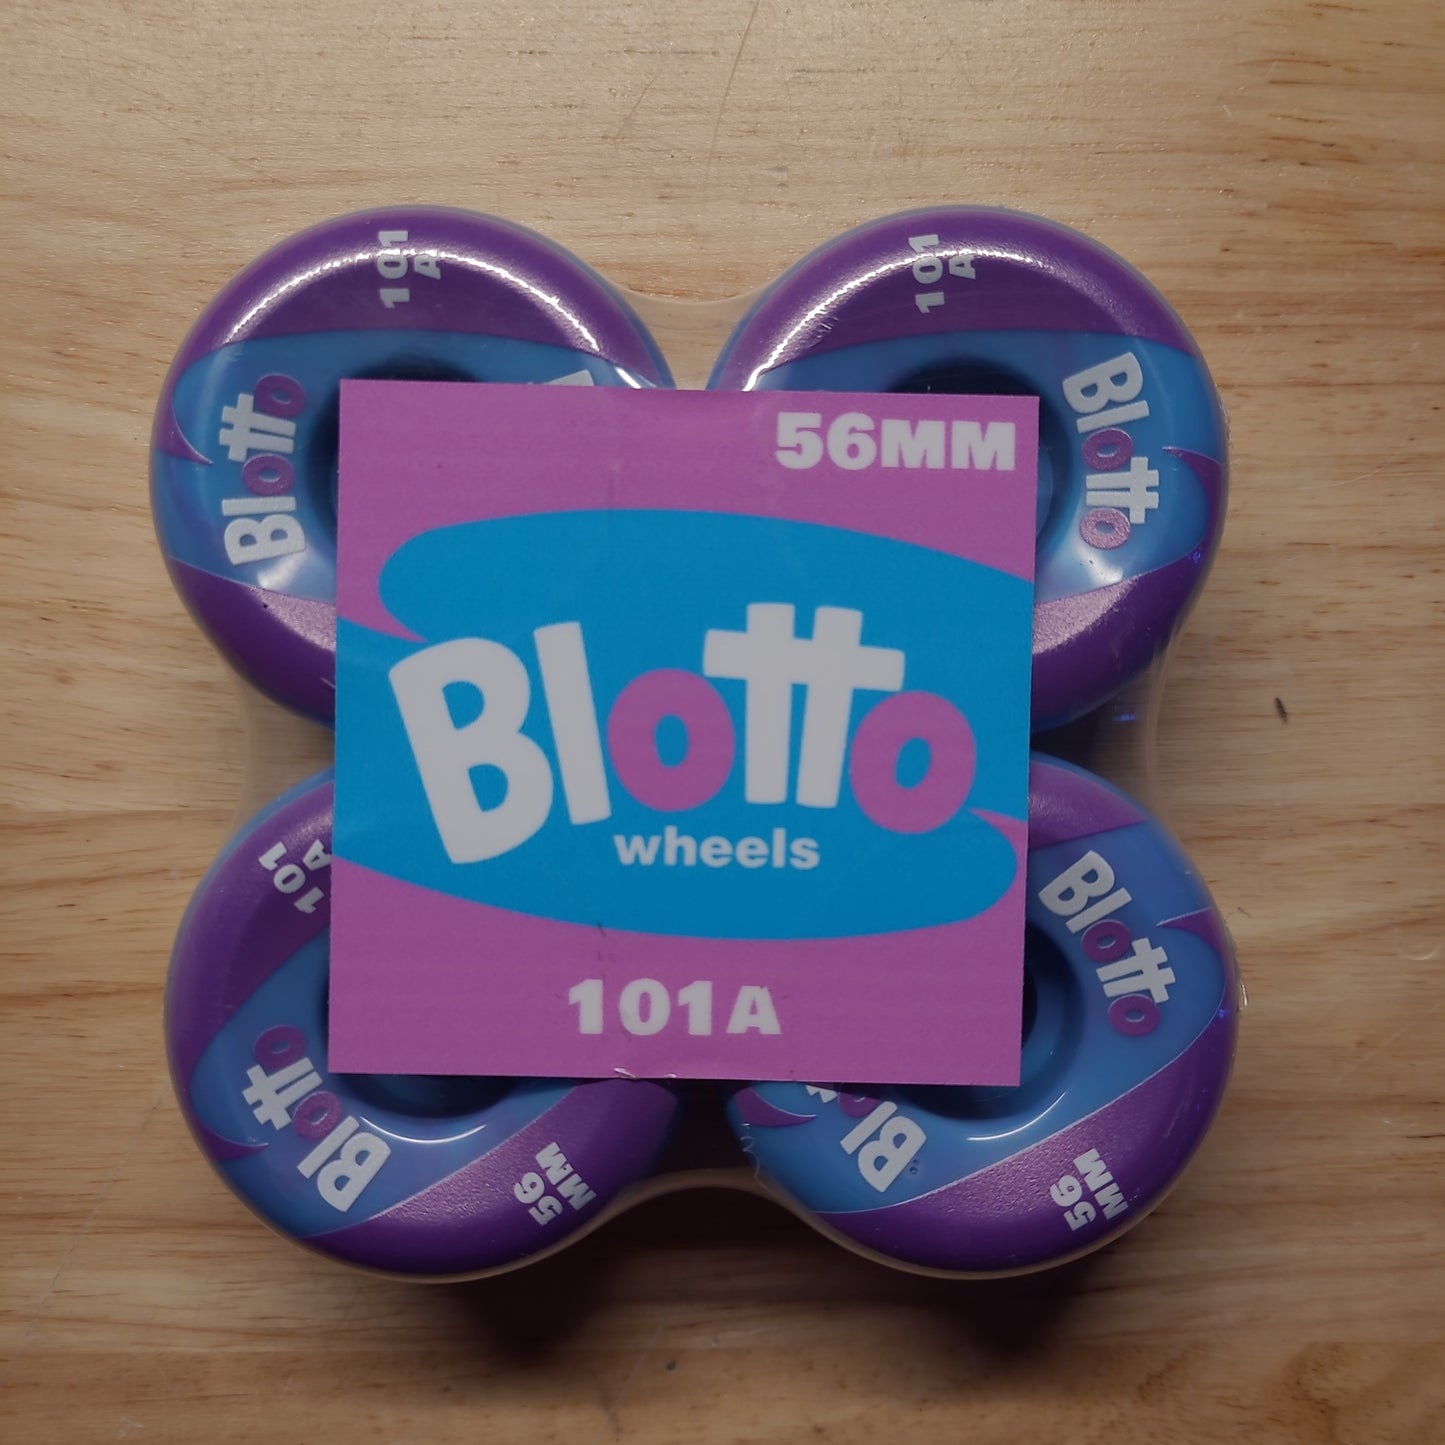 Blotto - Cotton Candy 56mm 101A Wheels